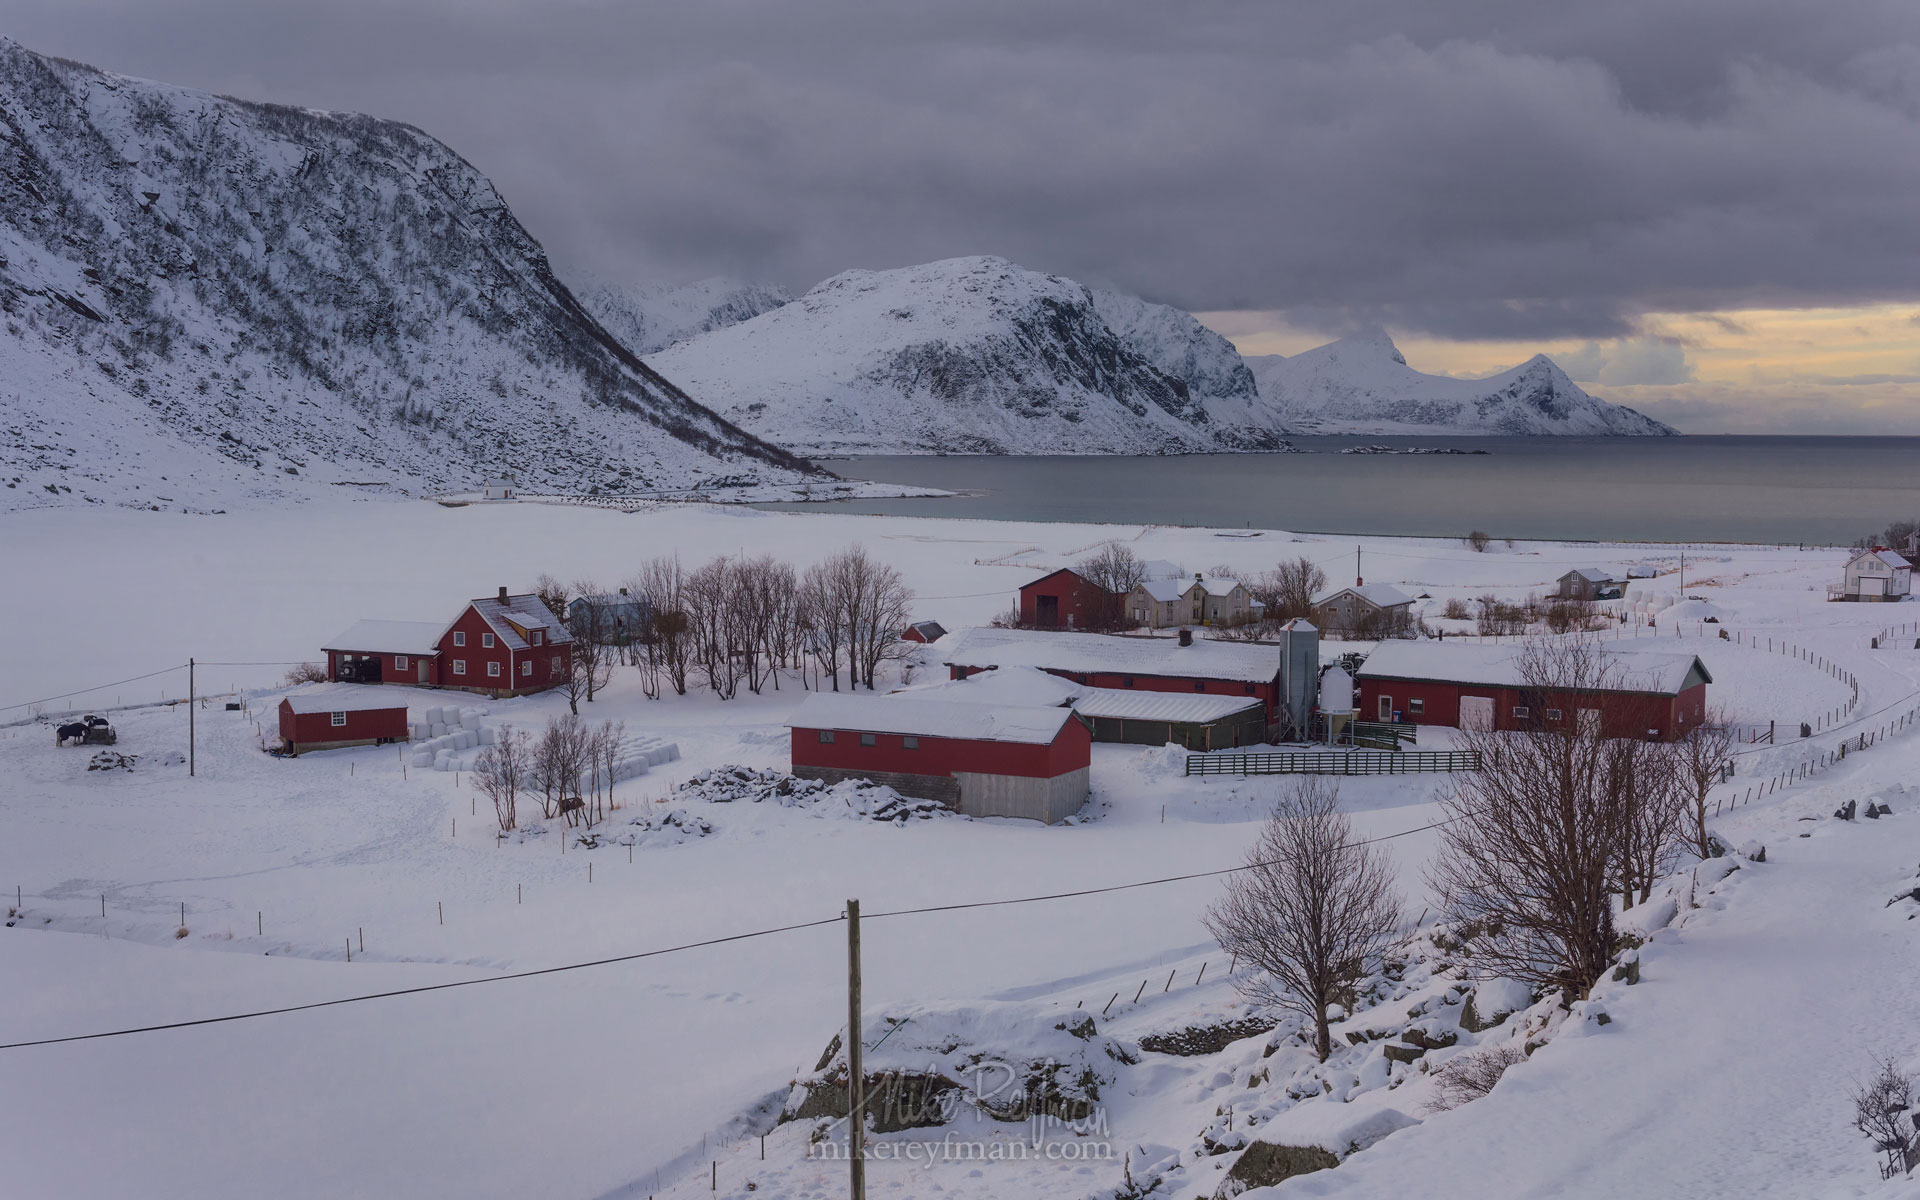  LF-MRD1E2307 - Lofoten Archipelago in Winter, Arctic Norway - Mike Reyfman Photography